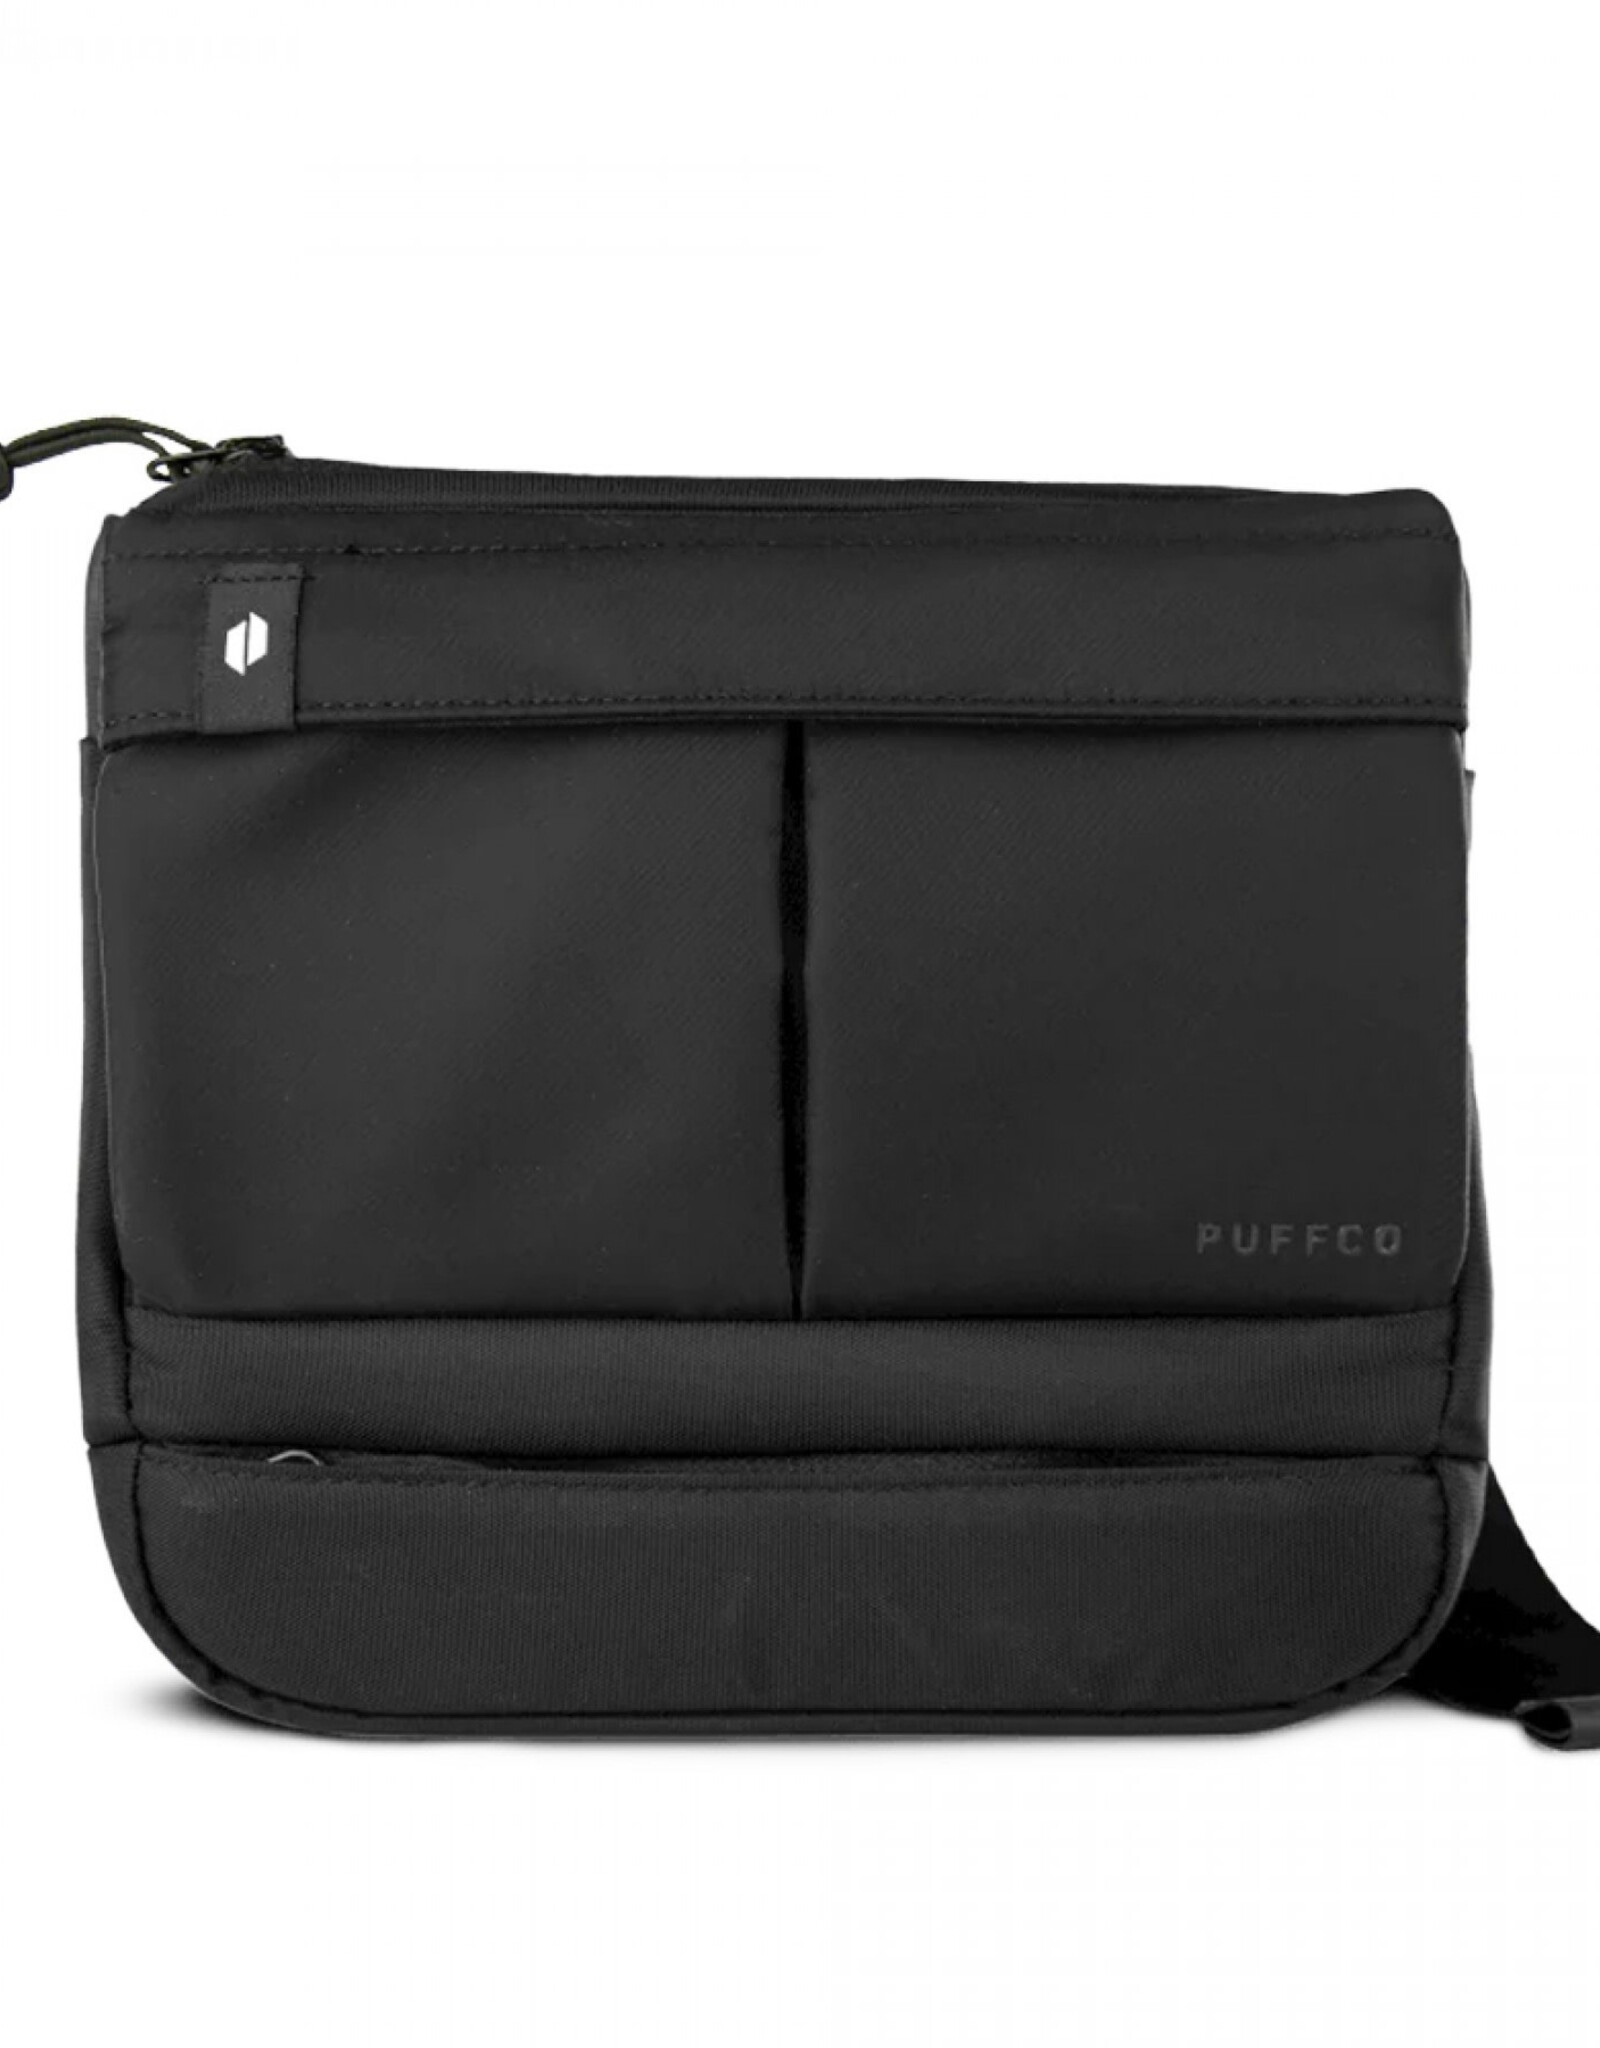 Puffco Pufco Proxy Travel Bag - Black